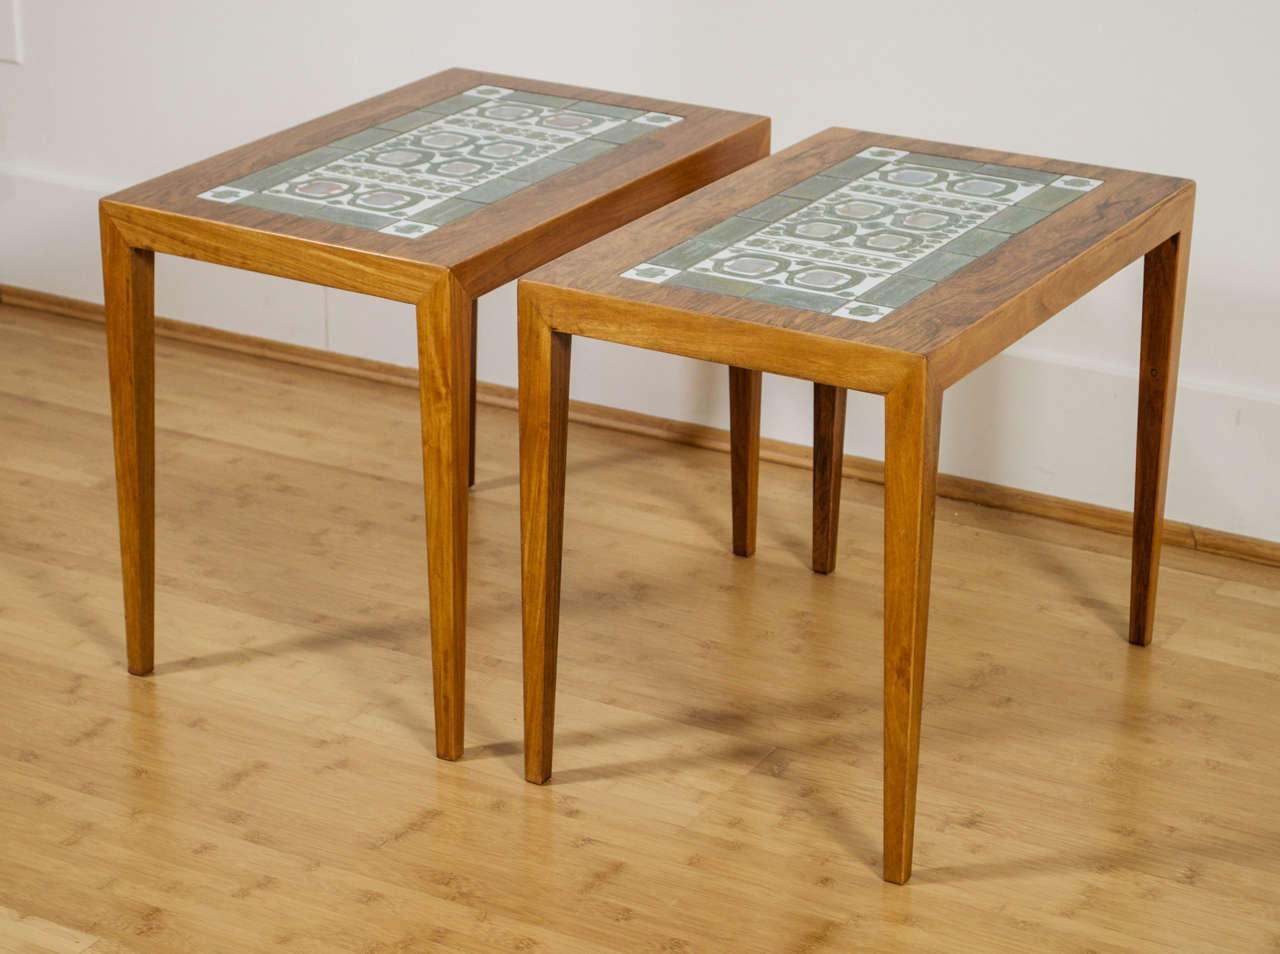 Danish Haslev Furniture - Nils Thorsen Tiles - Pair of Side Tables